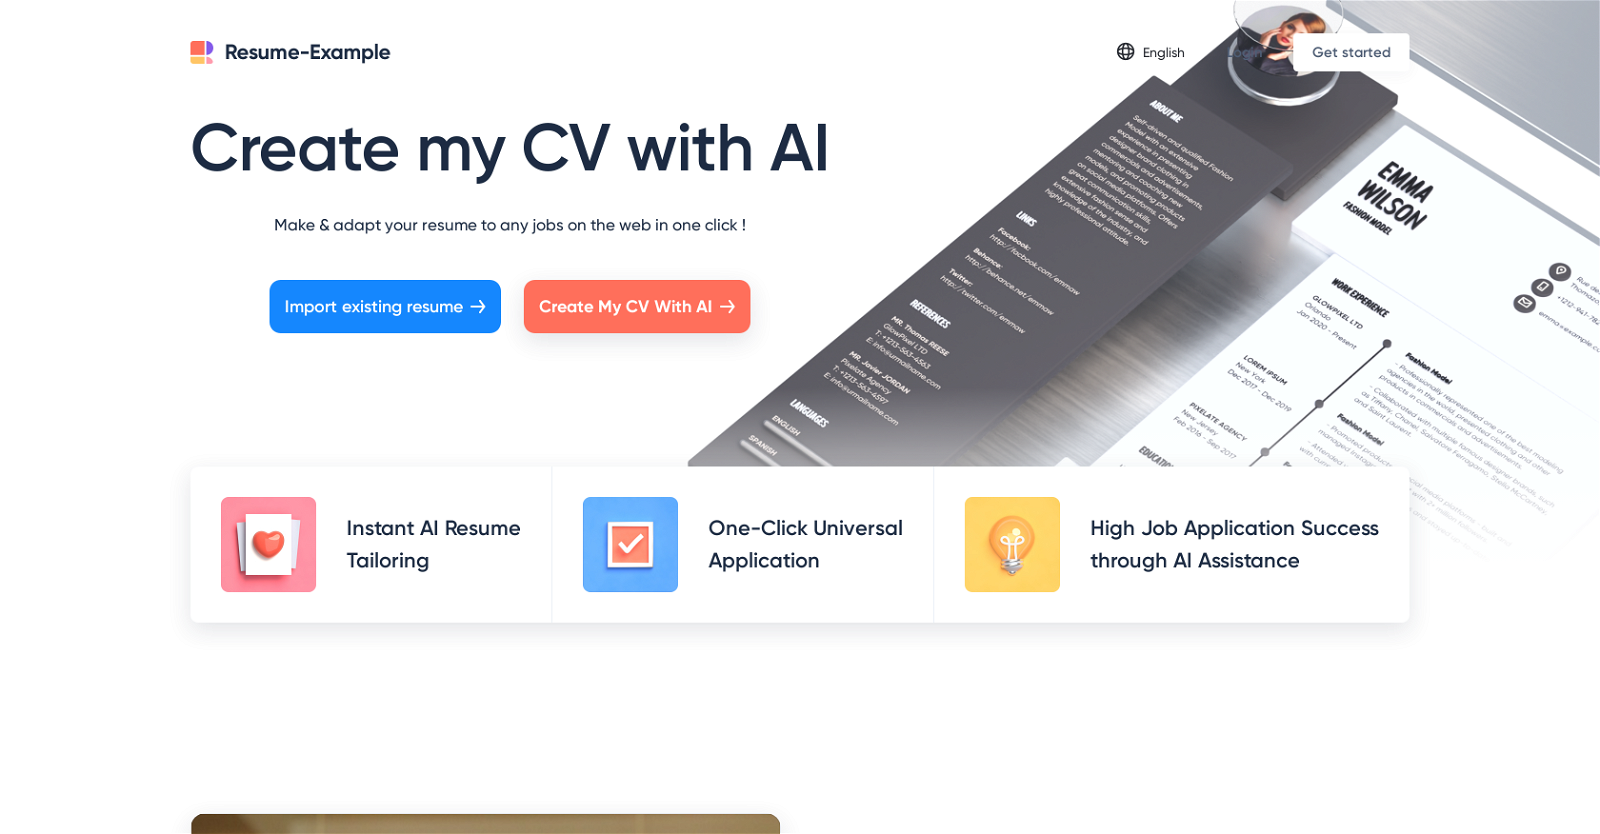 Resume-Example website